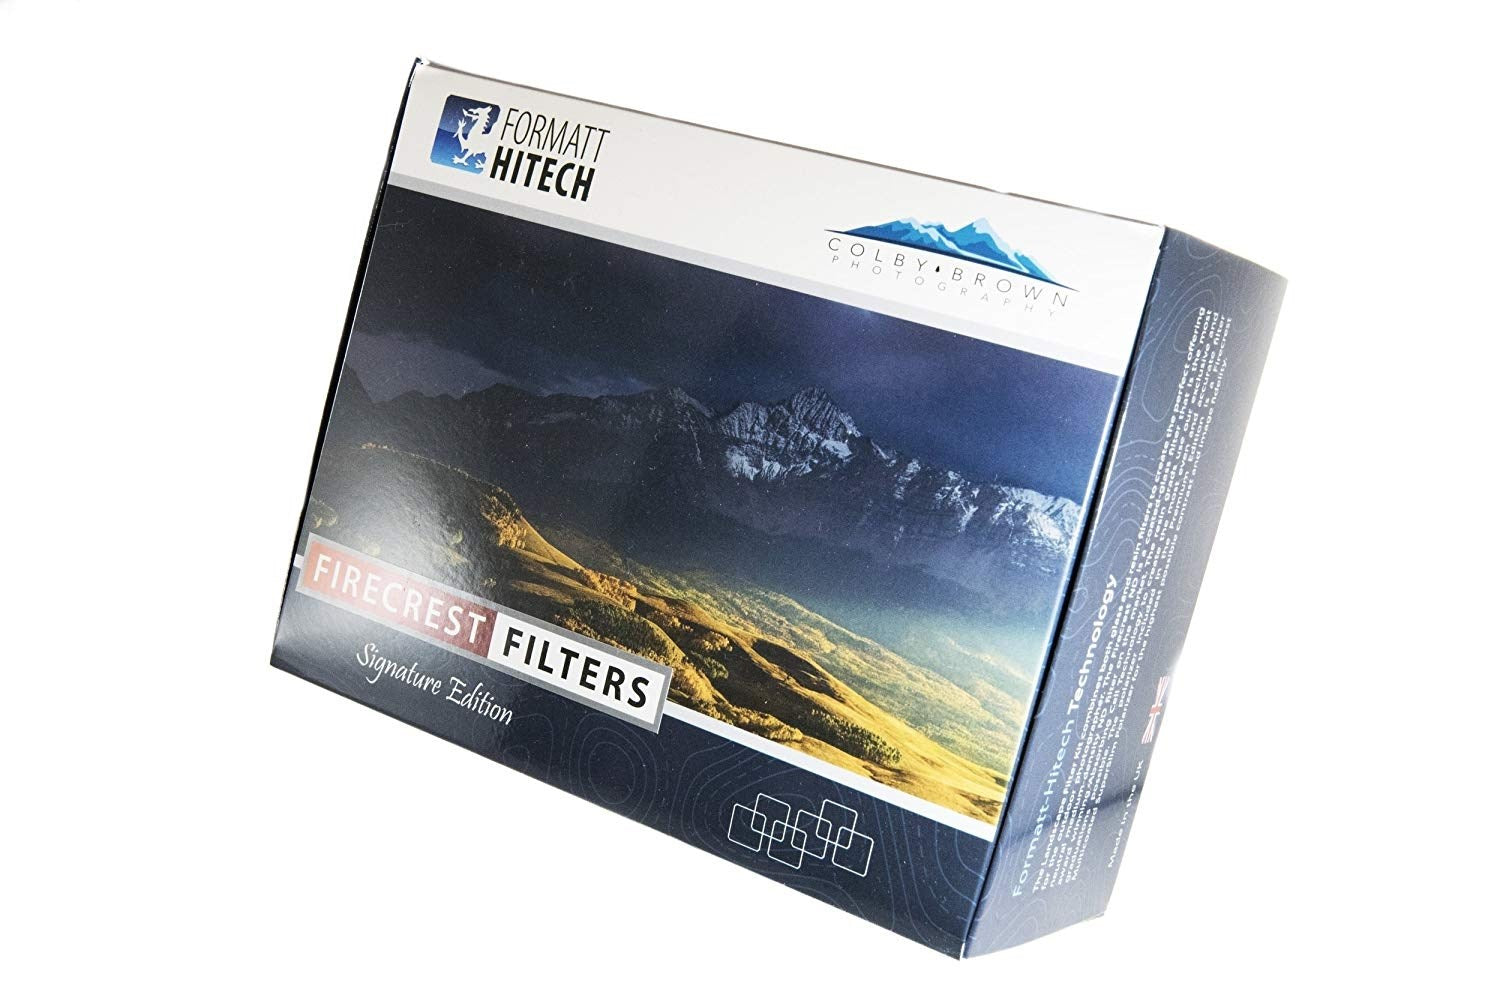 Product Image of Formatt Hitech Firecrest Ultra Colby Brown Signature Edition 100mm Premier Landscape Kit + 100mm Holder Kit